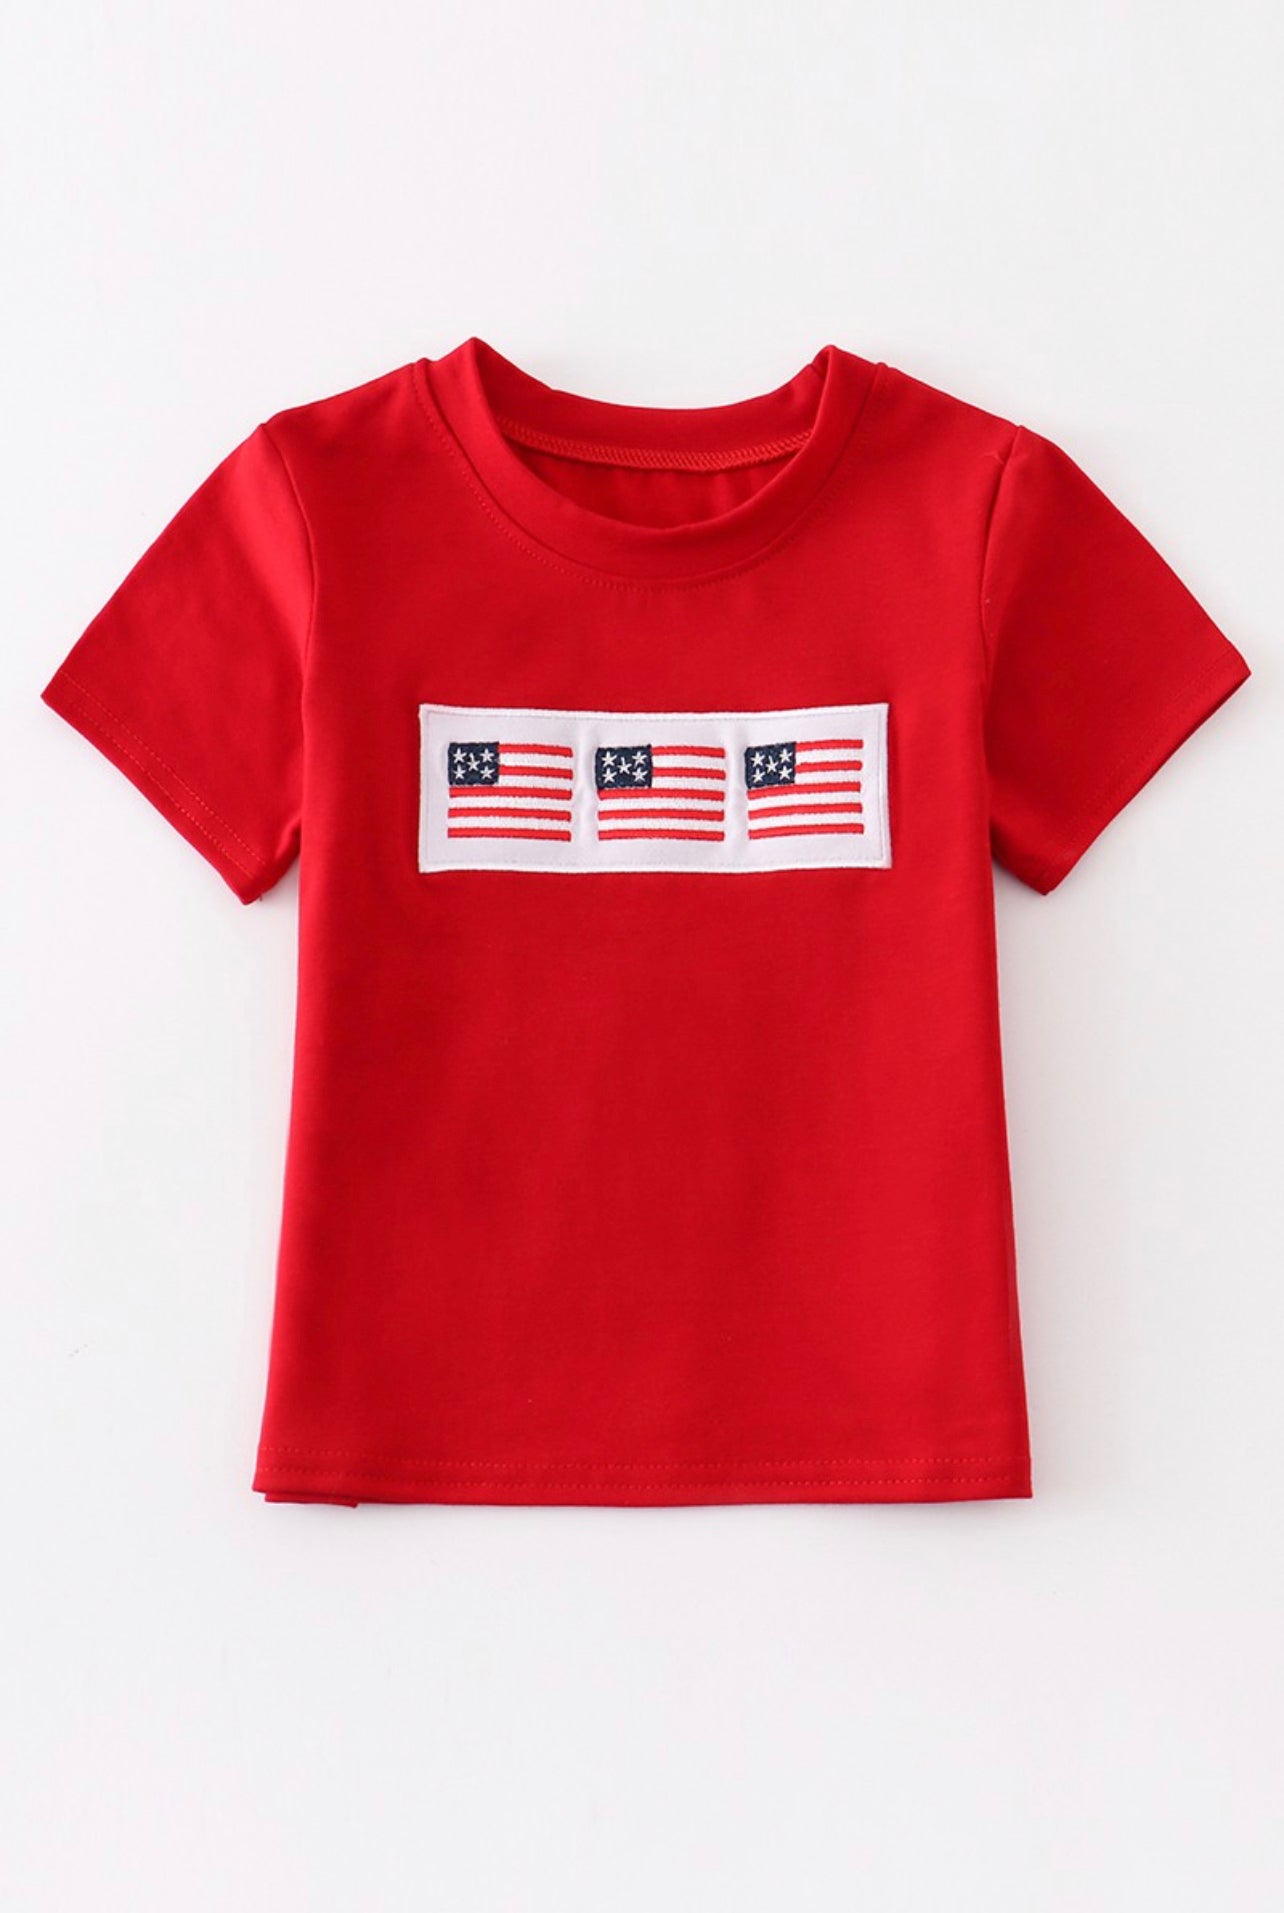 Boy’s Embroidered Flag Shirt